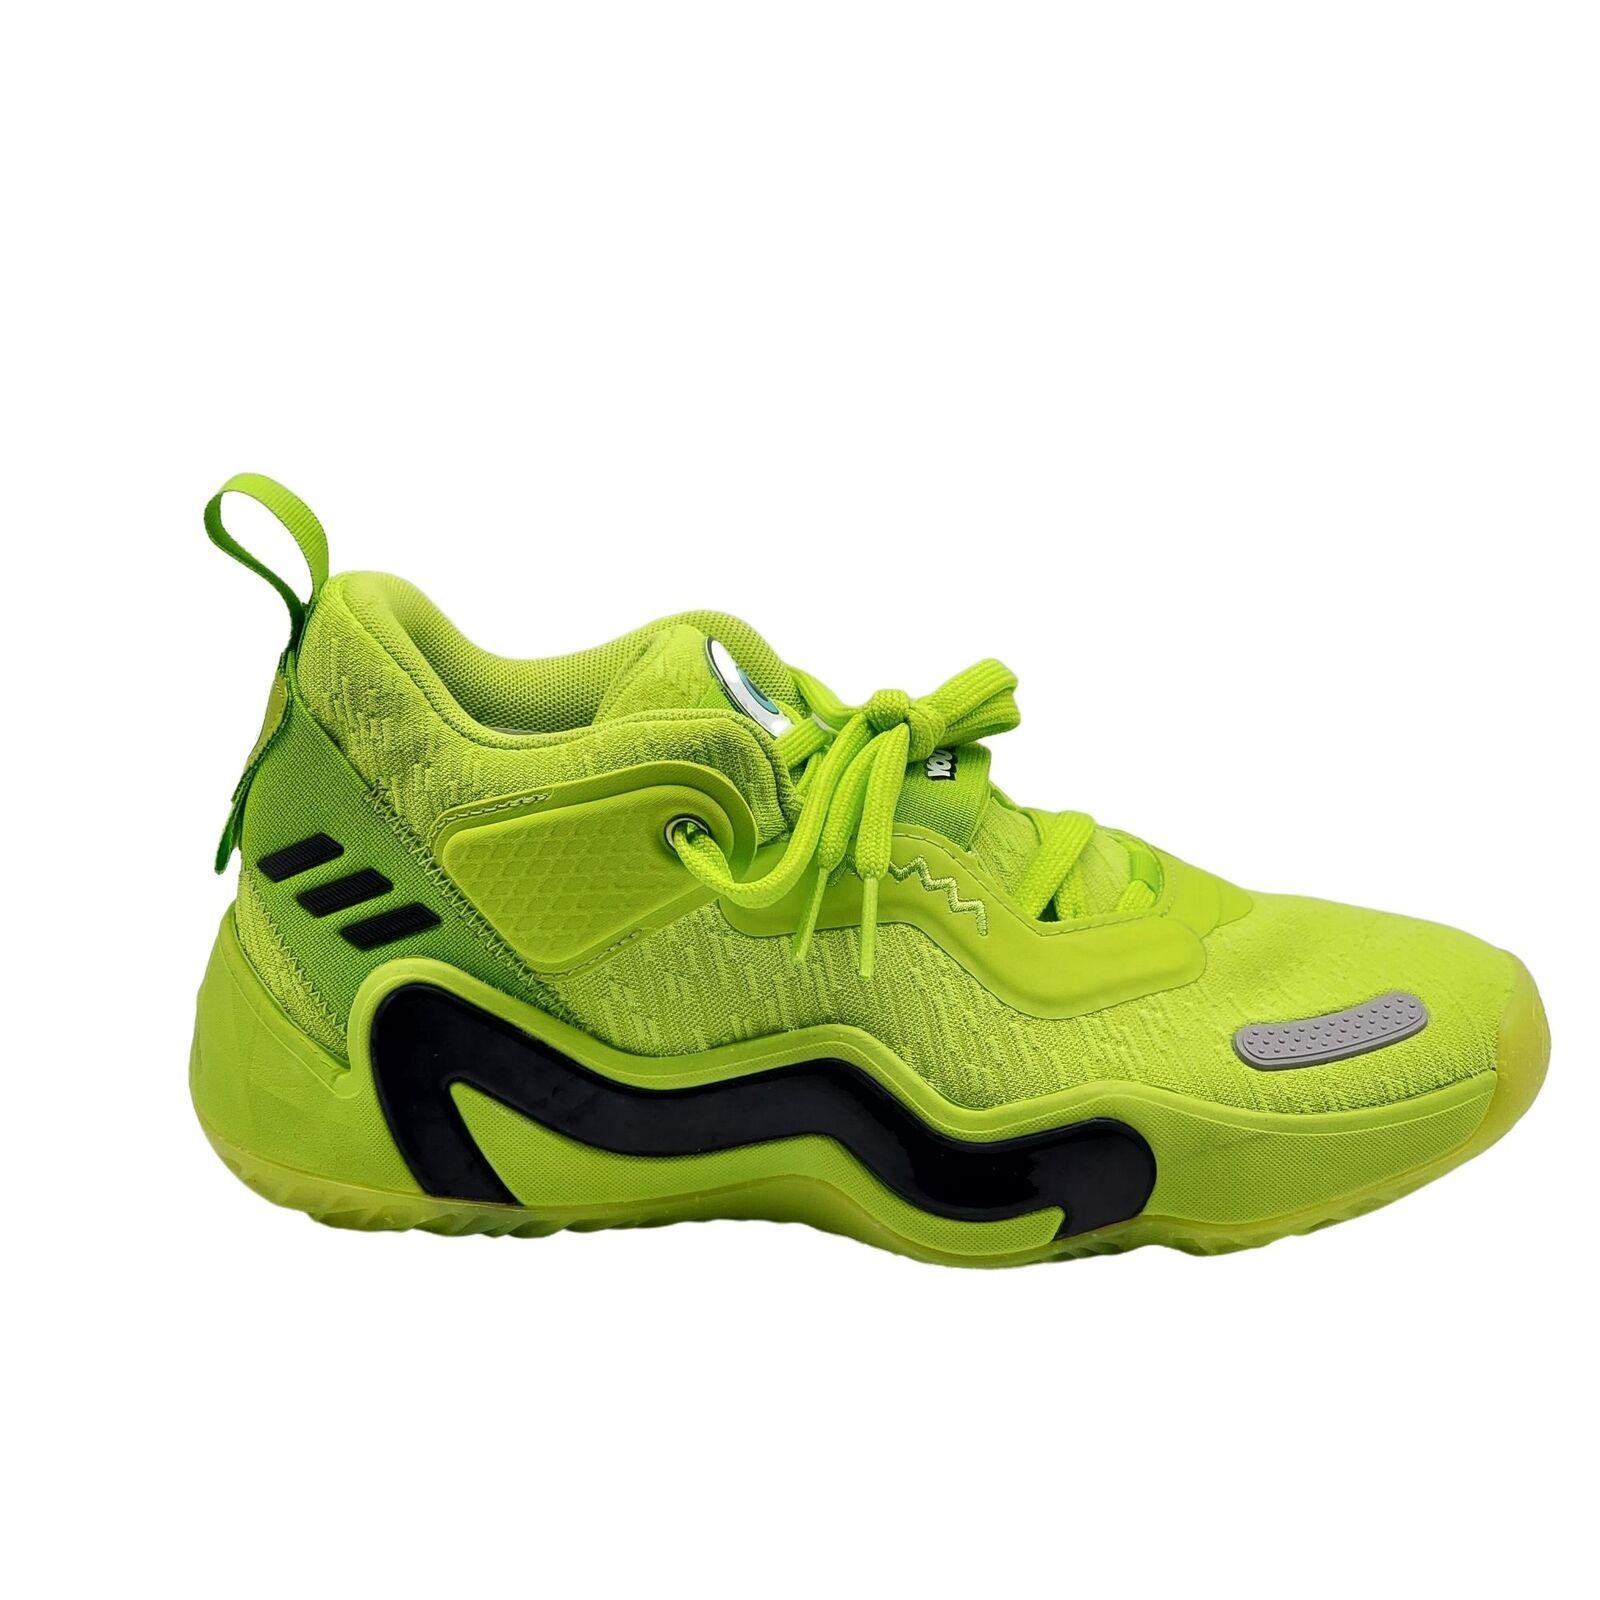 Adidas Mens Donavan Mitchell Don Issue 3 Mike Wazowski Neon Shoes Size 7